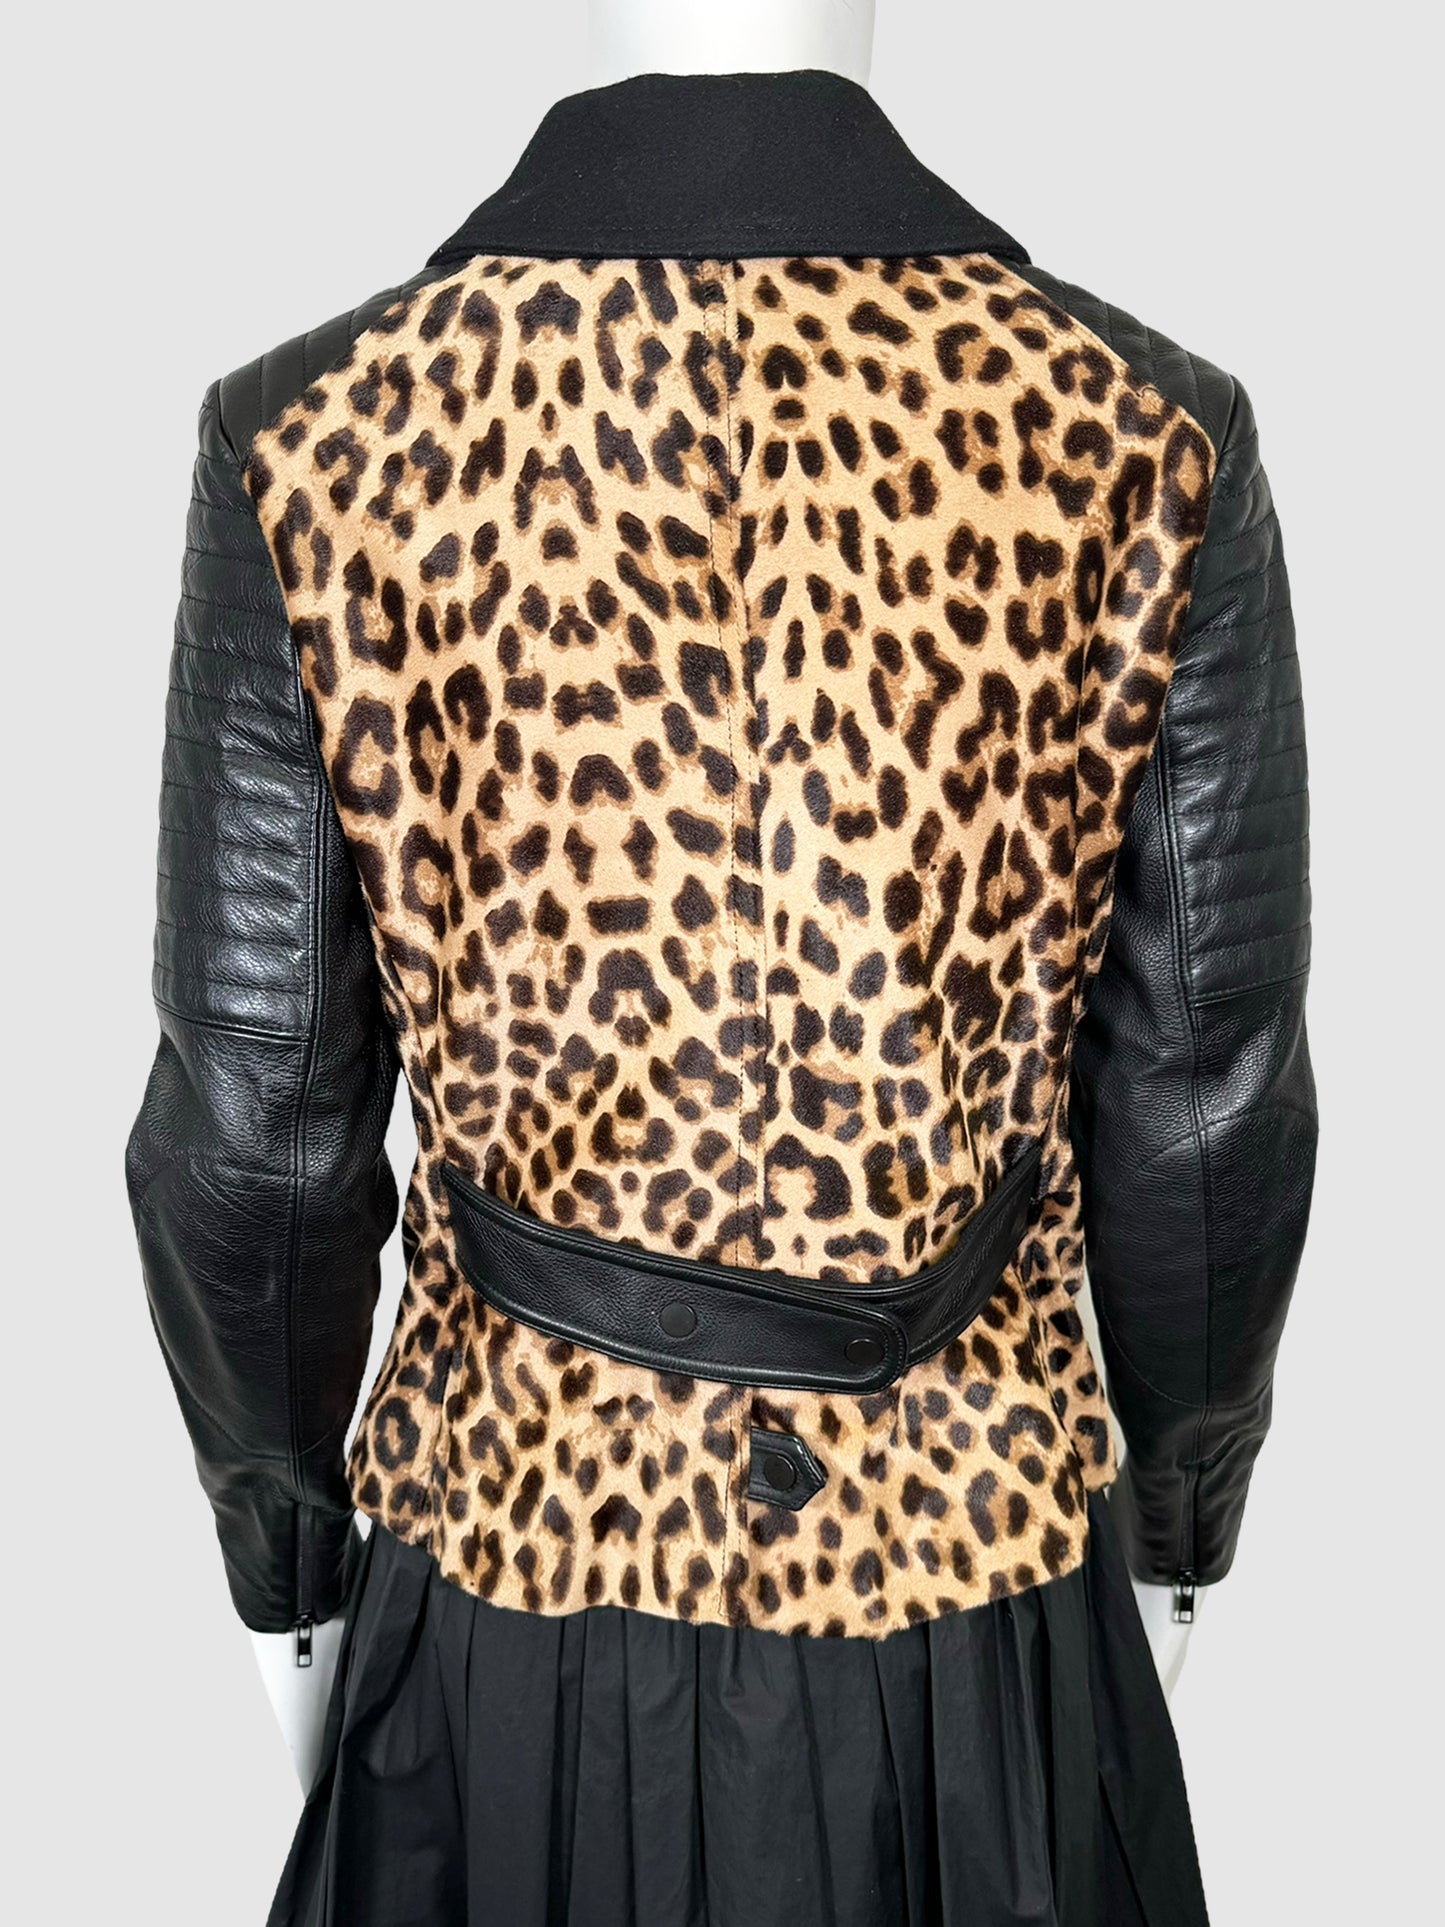 Leopard Print Leather Jacket - Size S